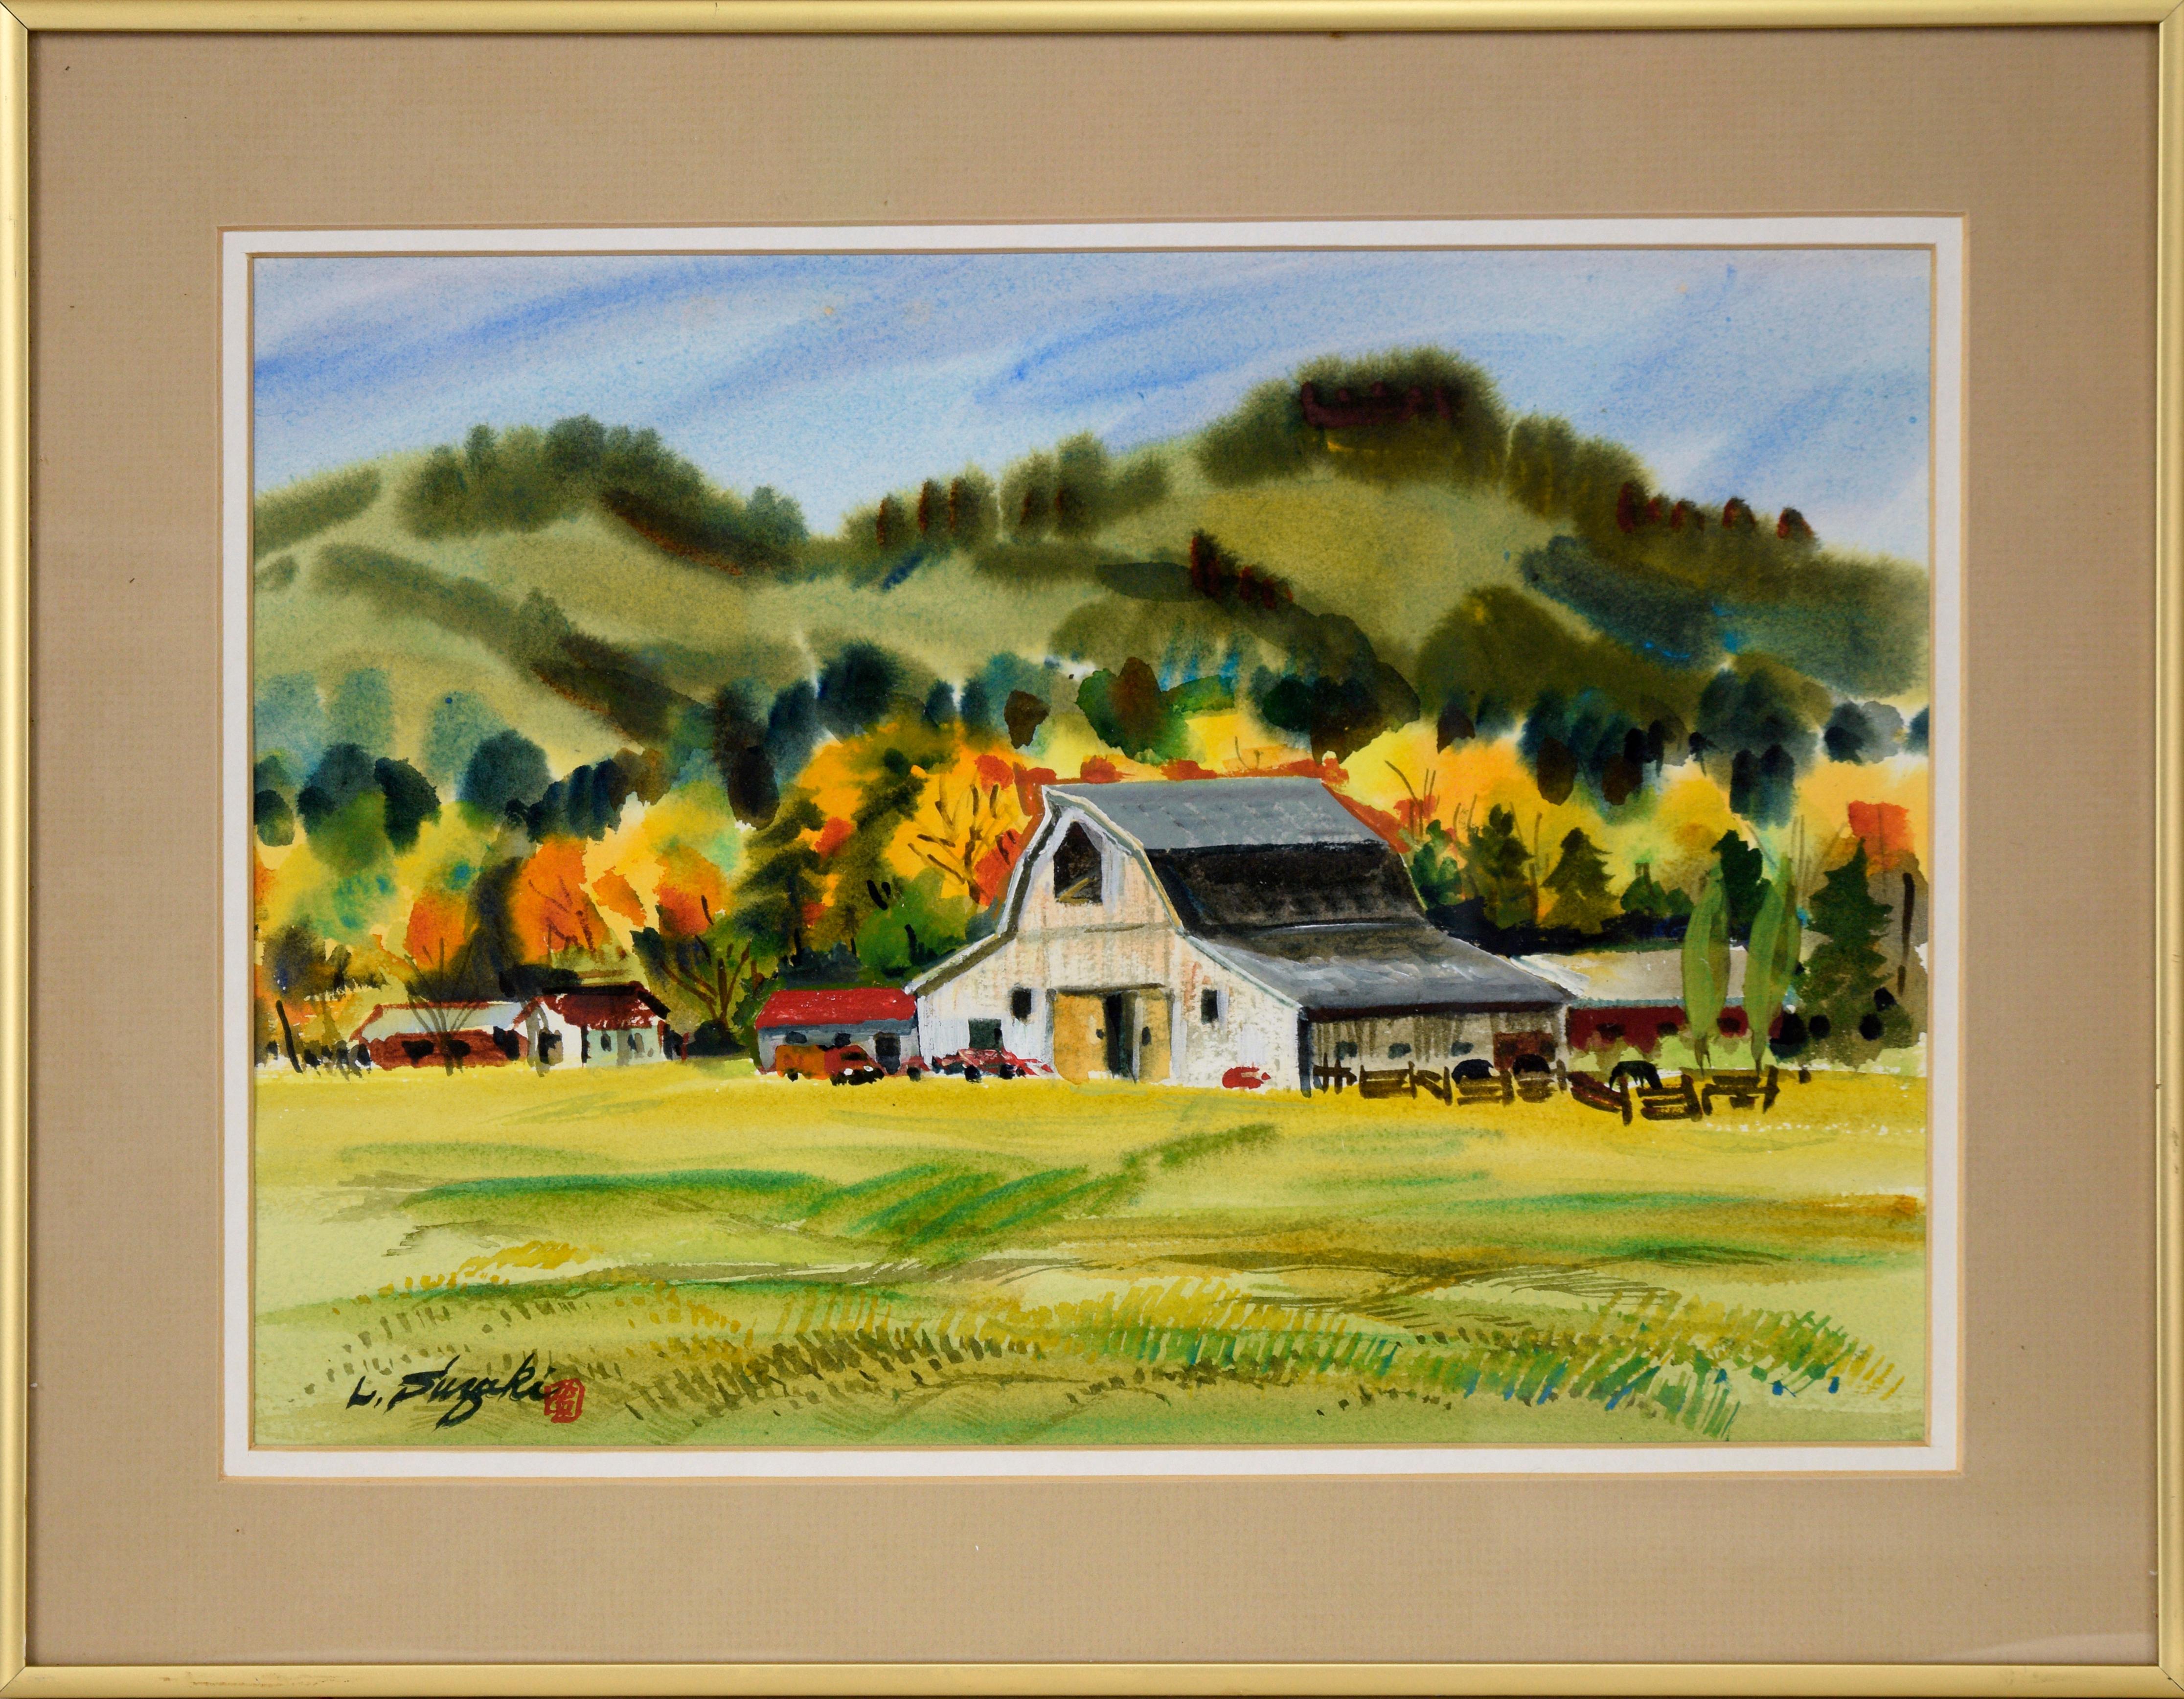 Lewis Suzuki Landscape Art - Autumnal Country Barn in Watercolor Landscape on Paper